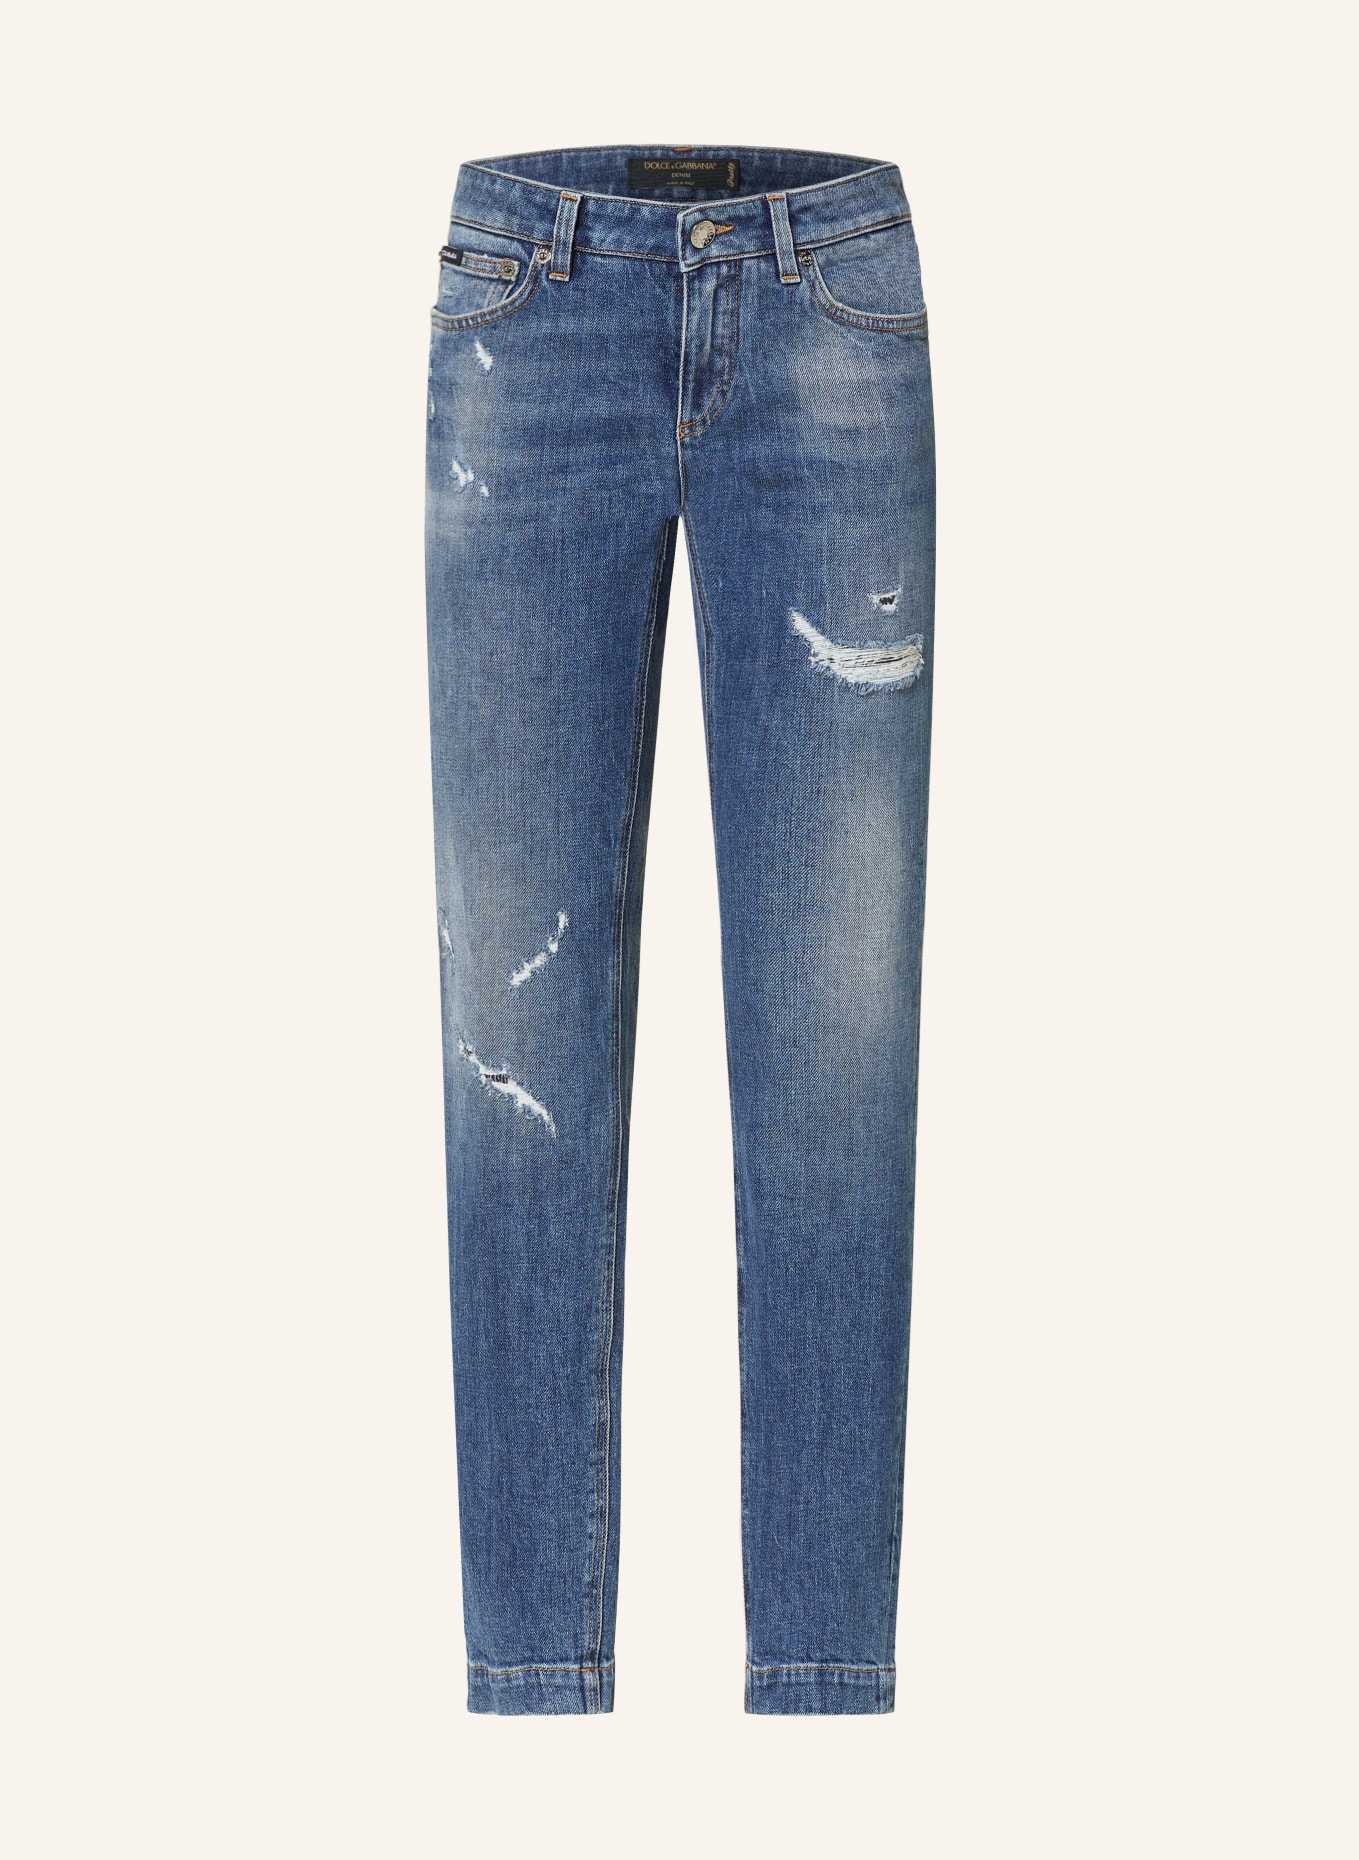 DOLCE & GABBANA Skinny jeans, Color: S9001 VARIANTE ABBINATA (Image 1)